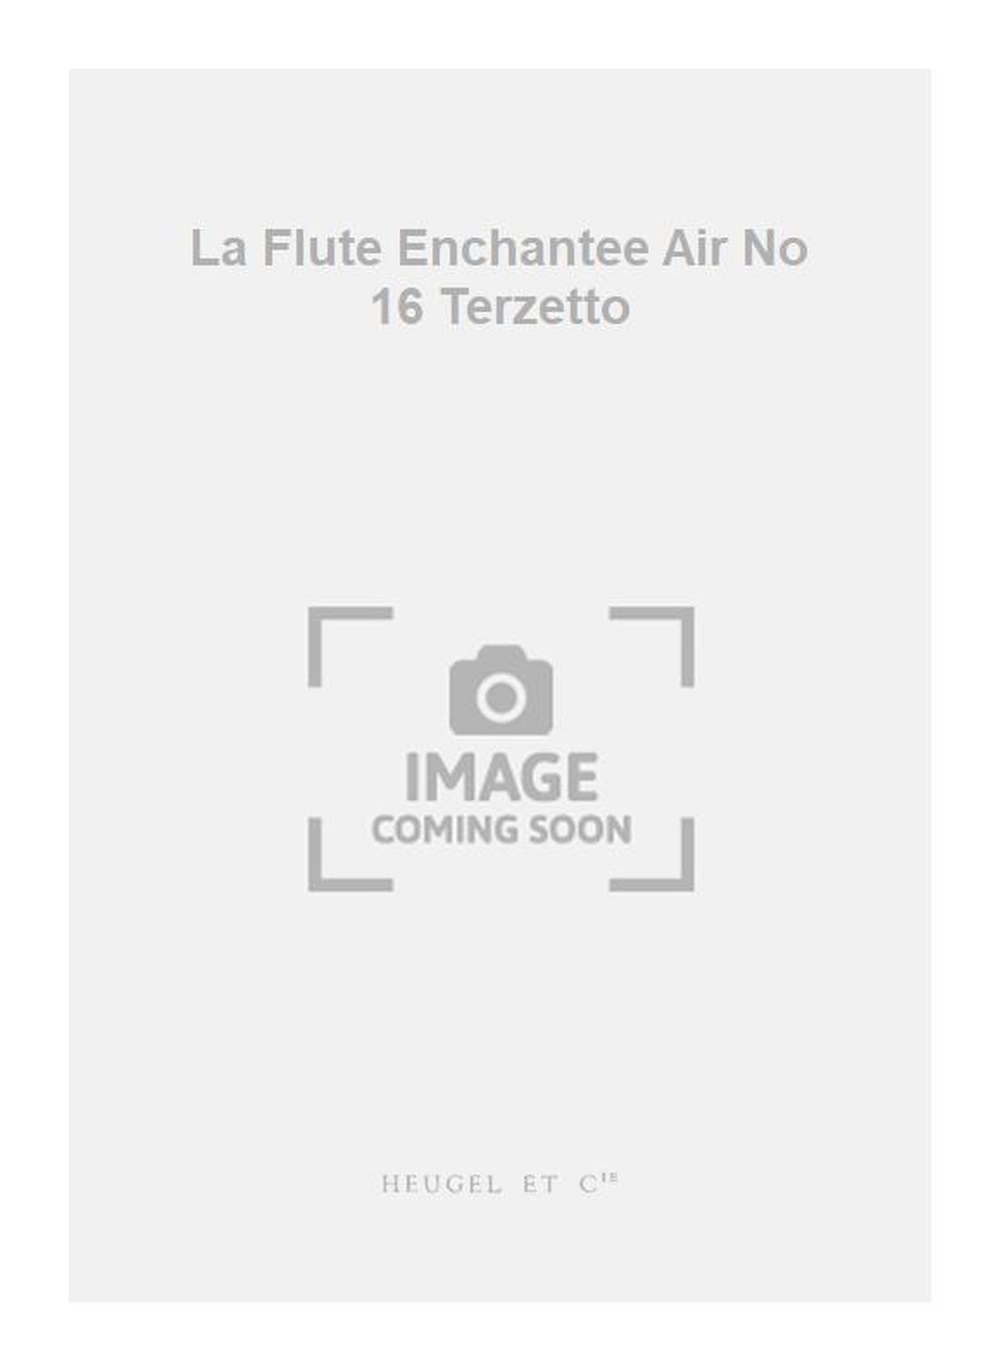 Wolfgang Amadeus Mozart: La Flute Enchantee Air No 16 Terzetto